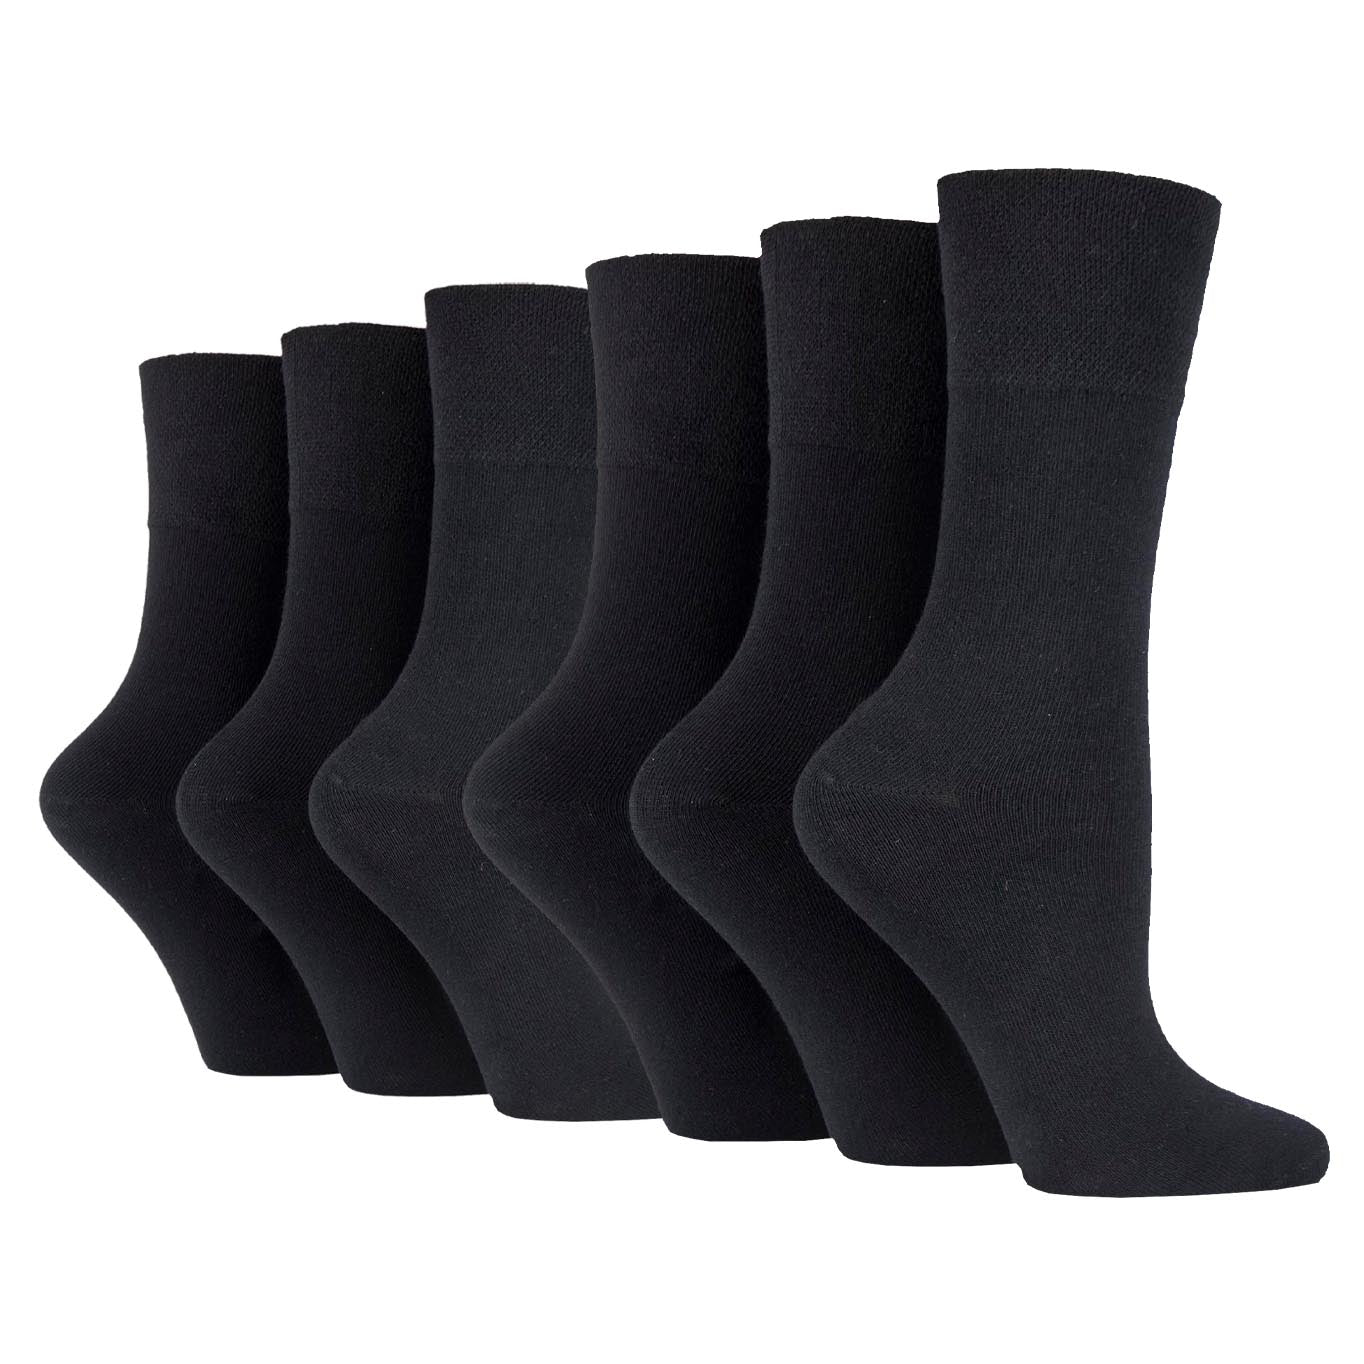 6 Pairs Ladies Gentle Grip Cotton Socks Plain Black